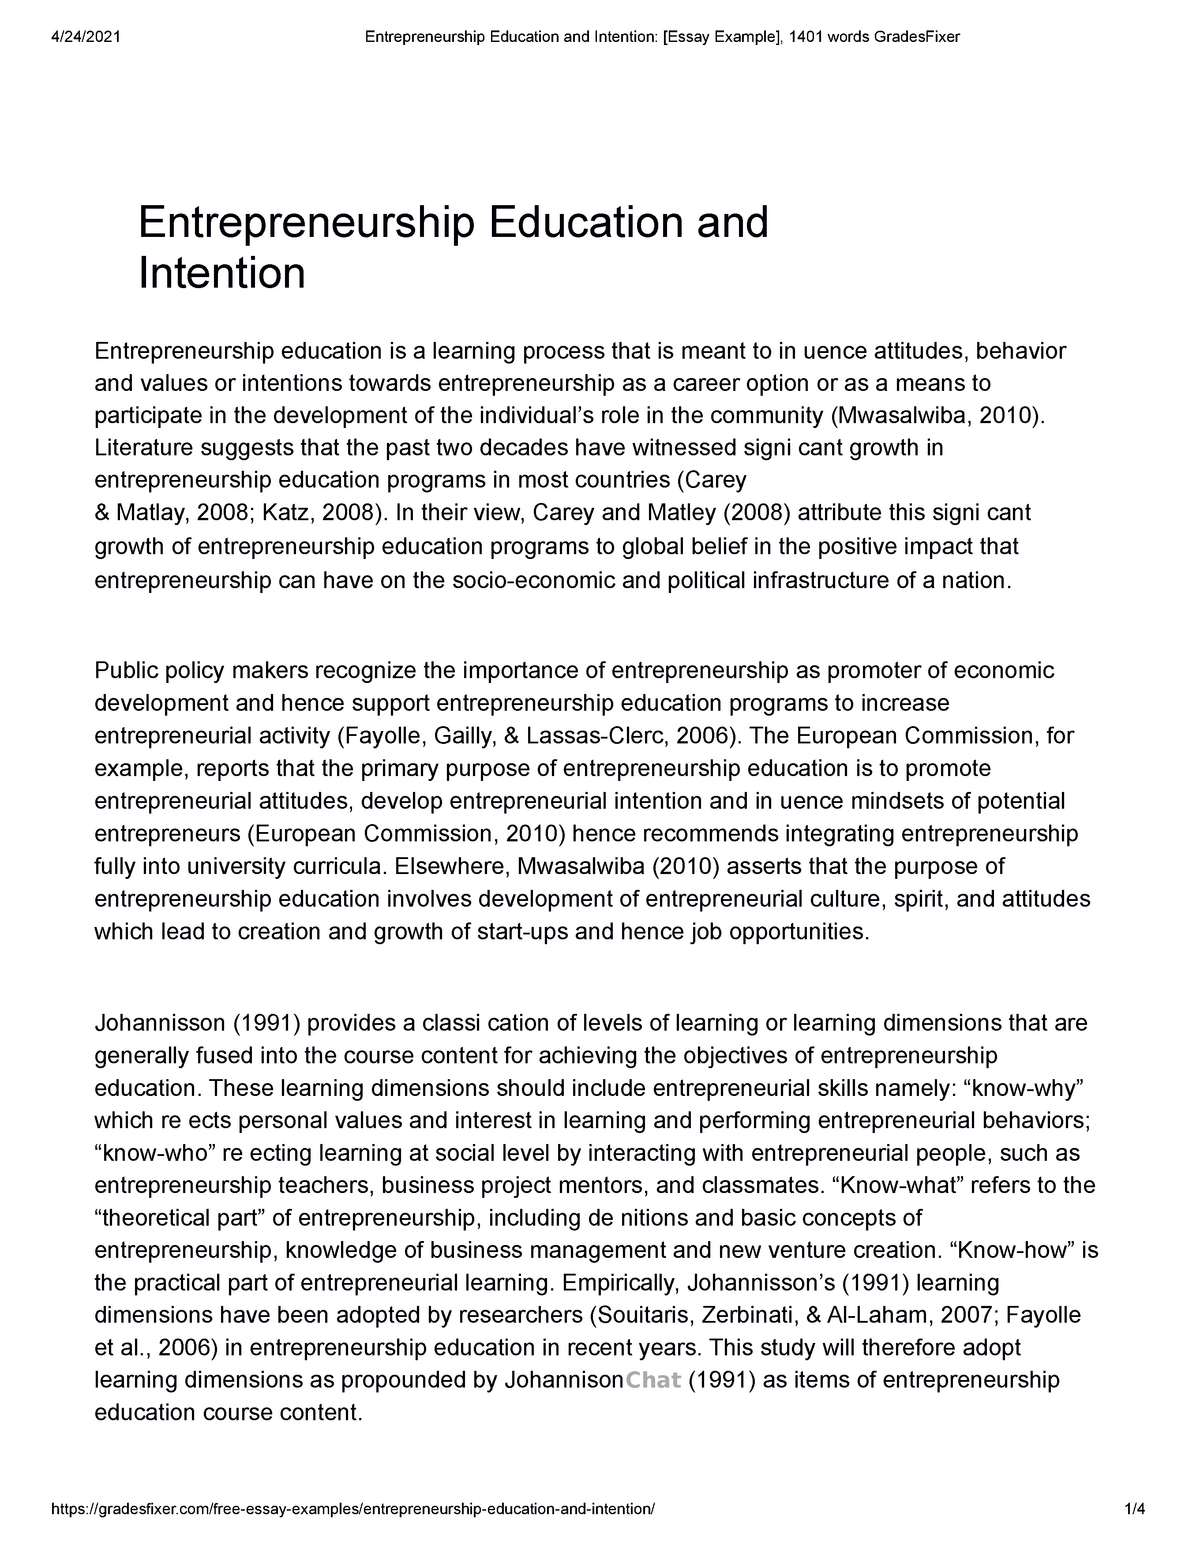 learnings about entrepreneurship essay